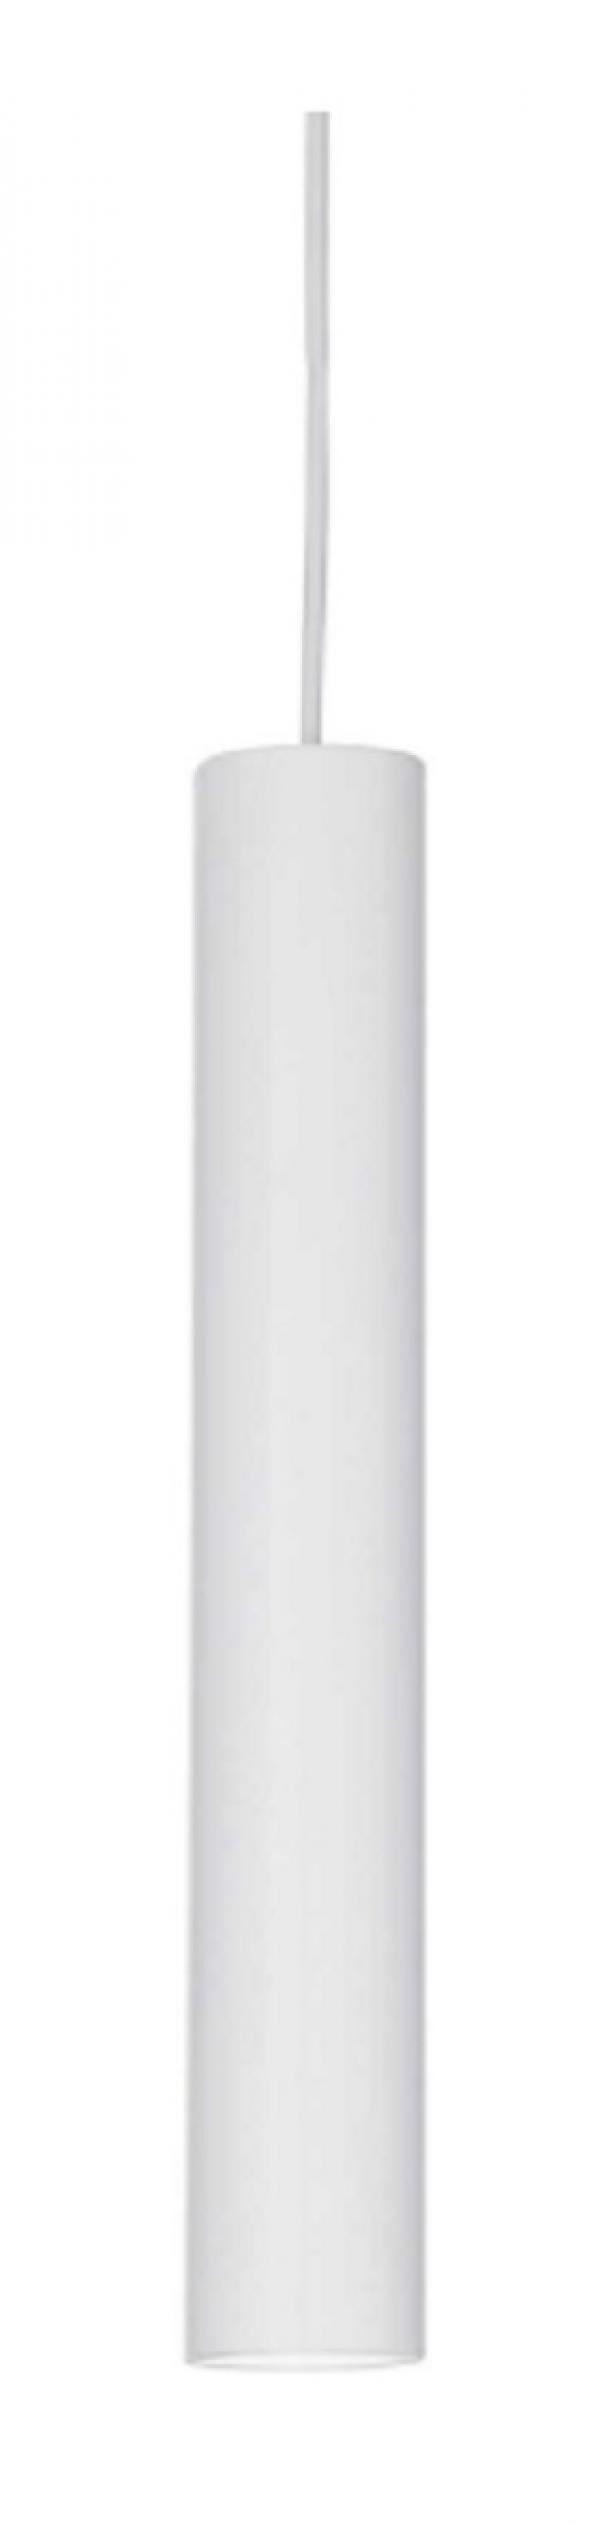 ideal lux ideal lux lampada sospensione mod. look sp1 small bianco 104935